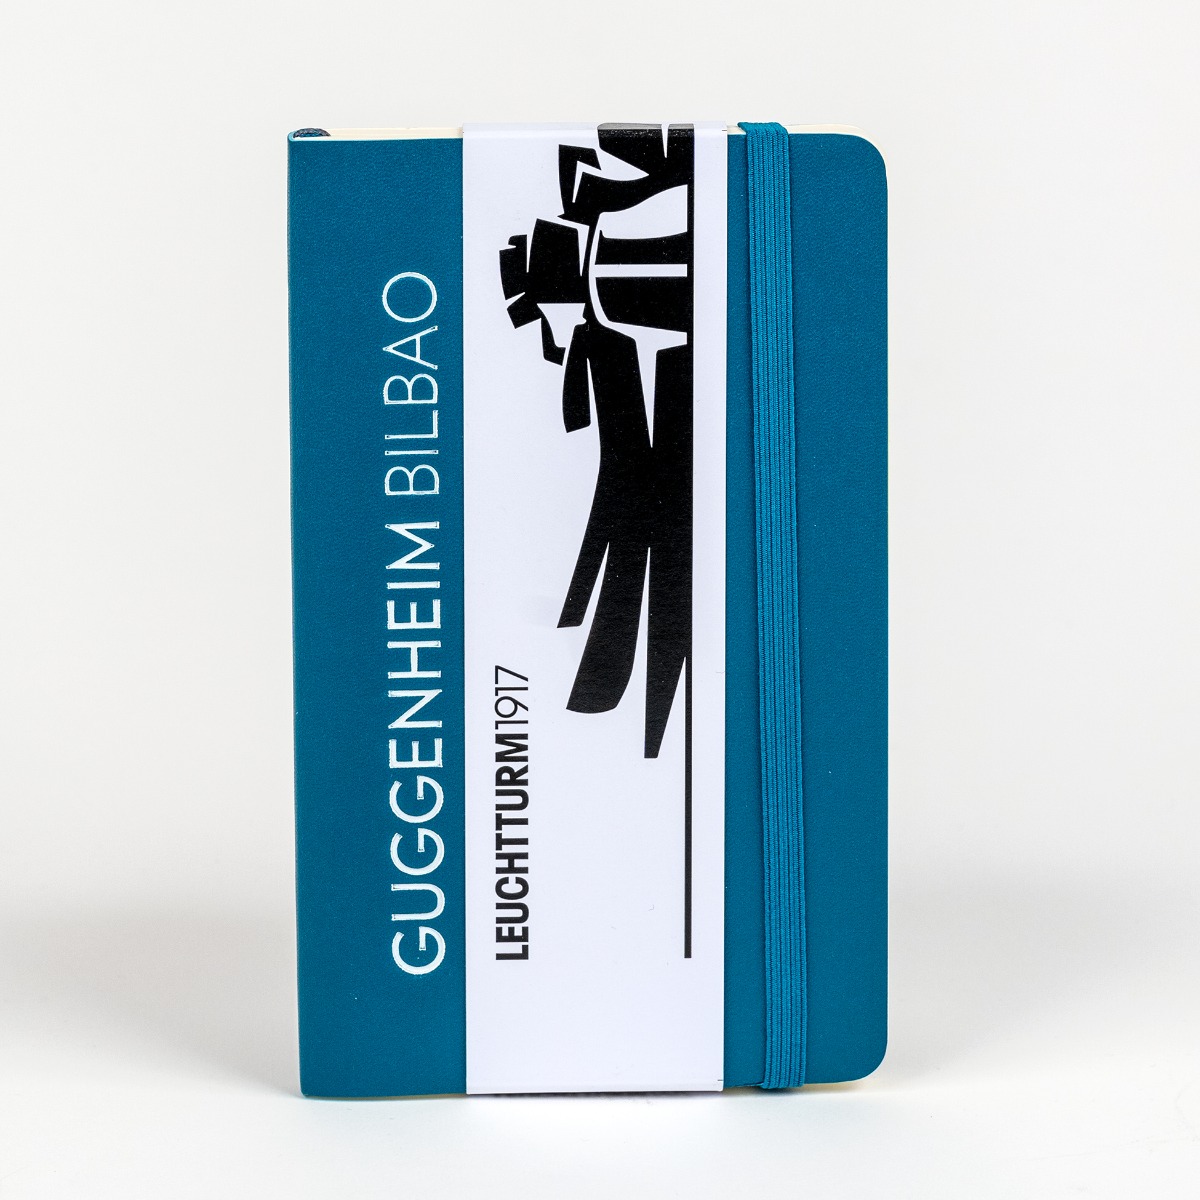 Cuaderno con logo Guggenheim Bilbao